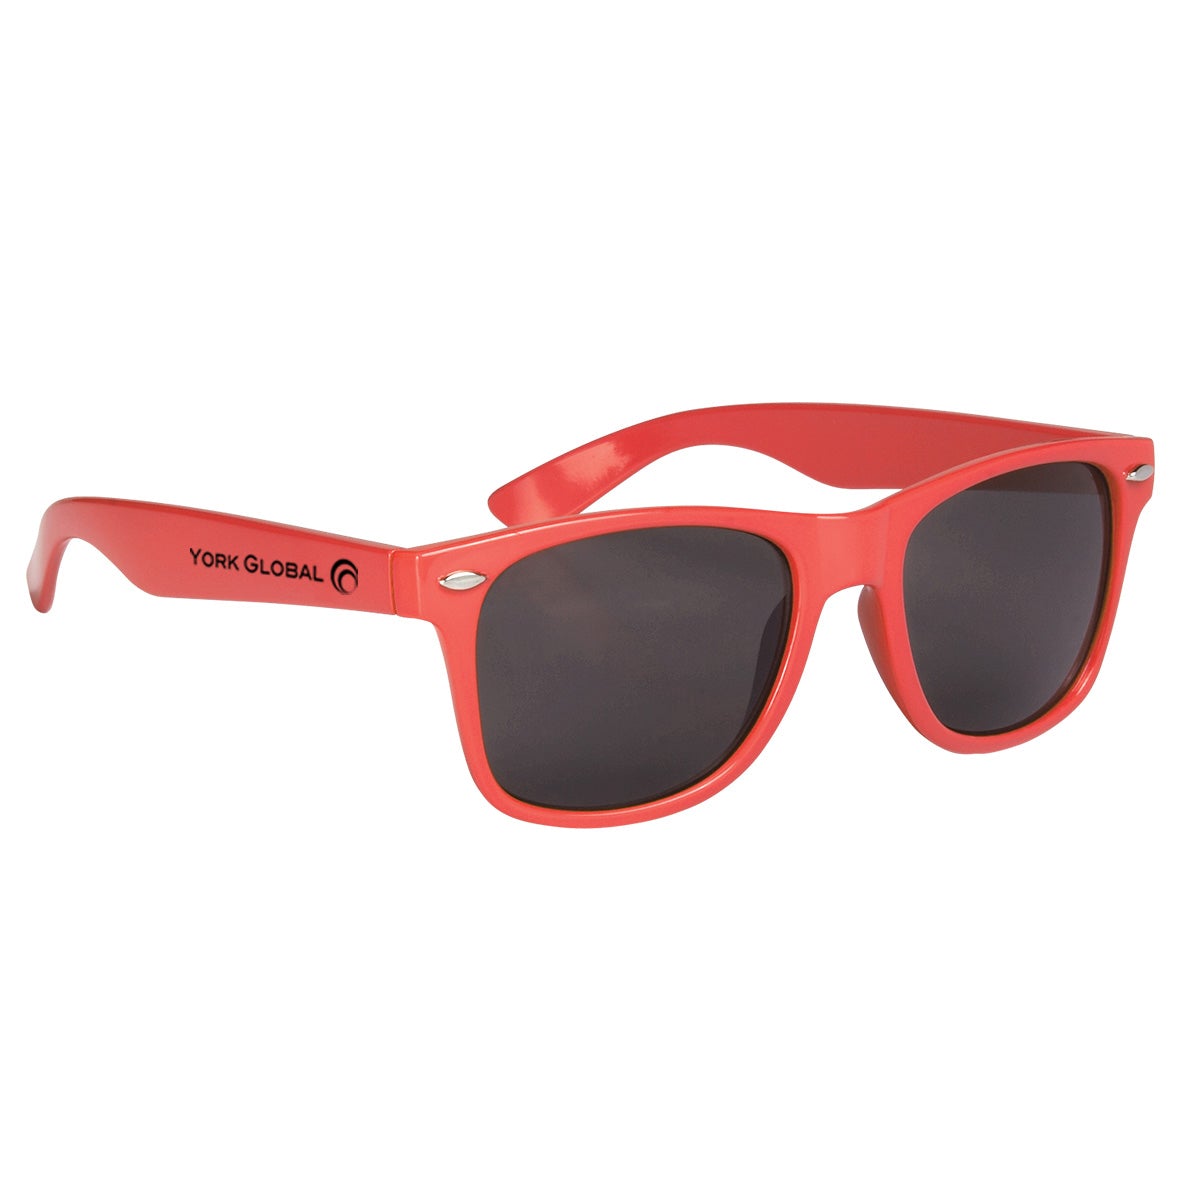 Malibu Sunglasses Sunglasses Hit Promo Coral Single Color 